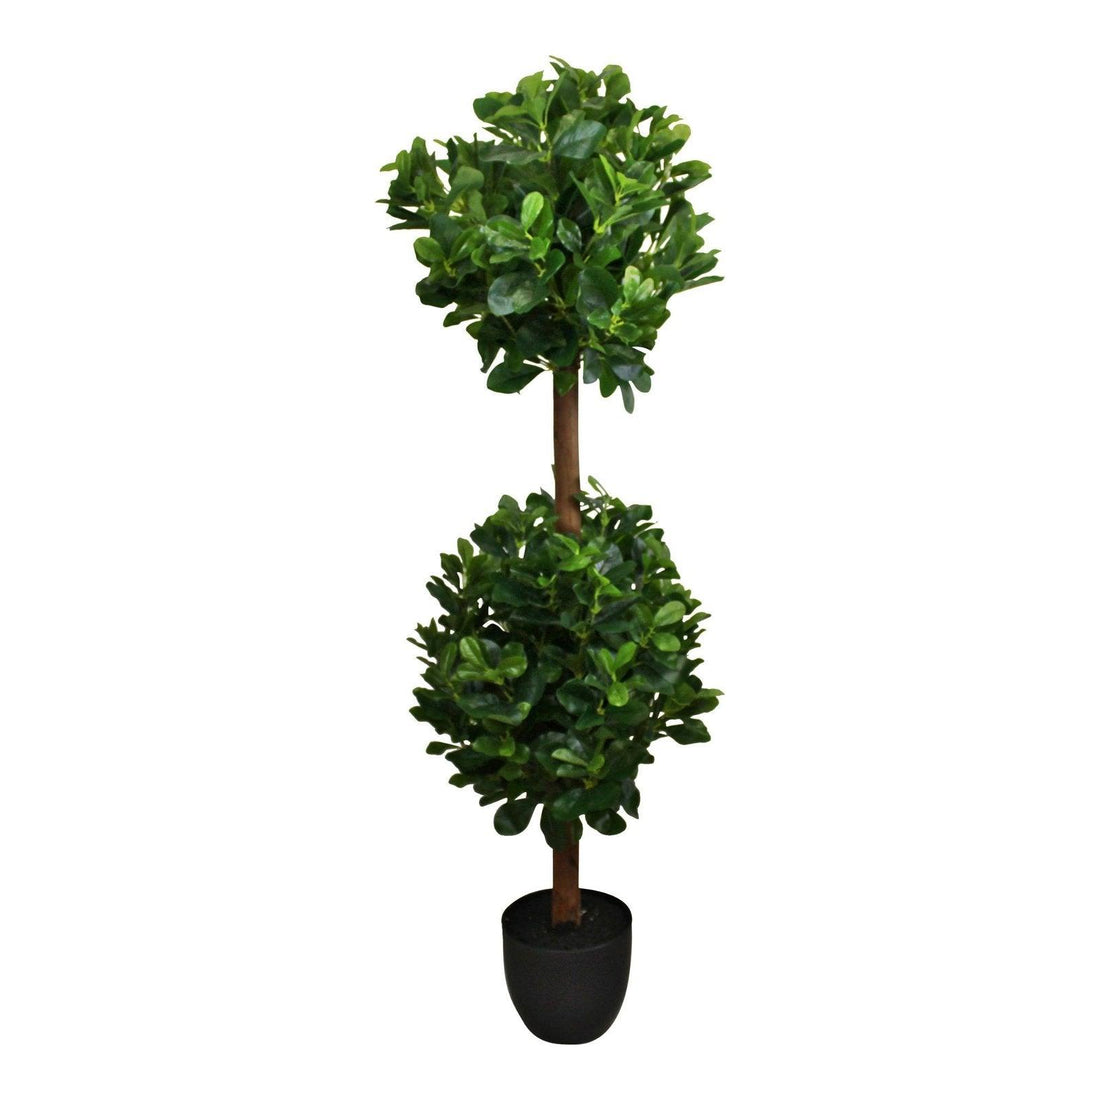 Artificial Tung Oil Ball Tree, 120cm - £100.99 - Artificial Plants 